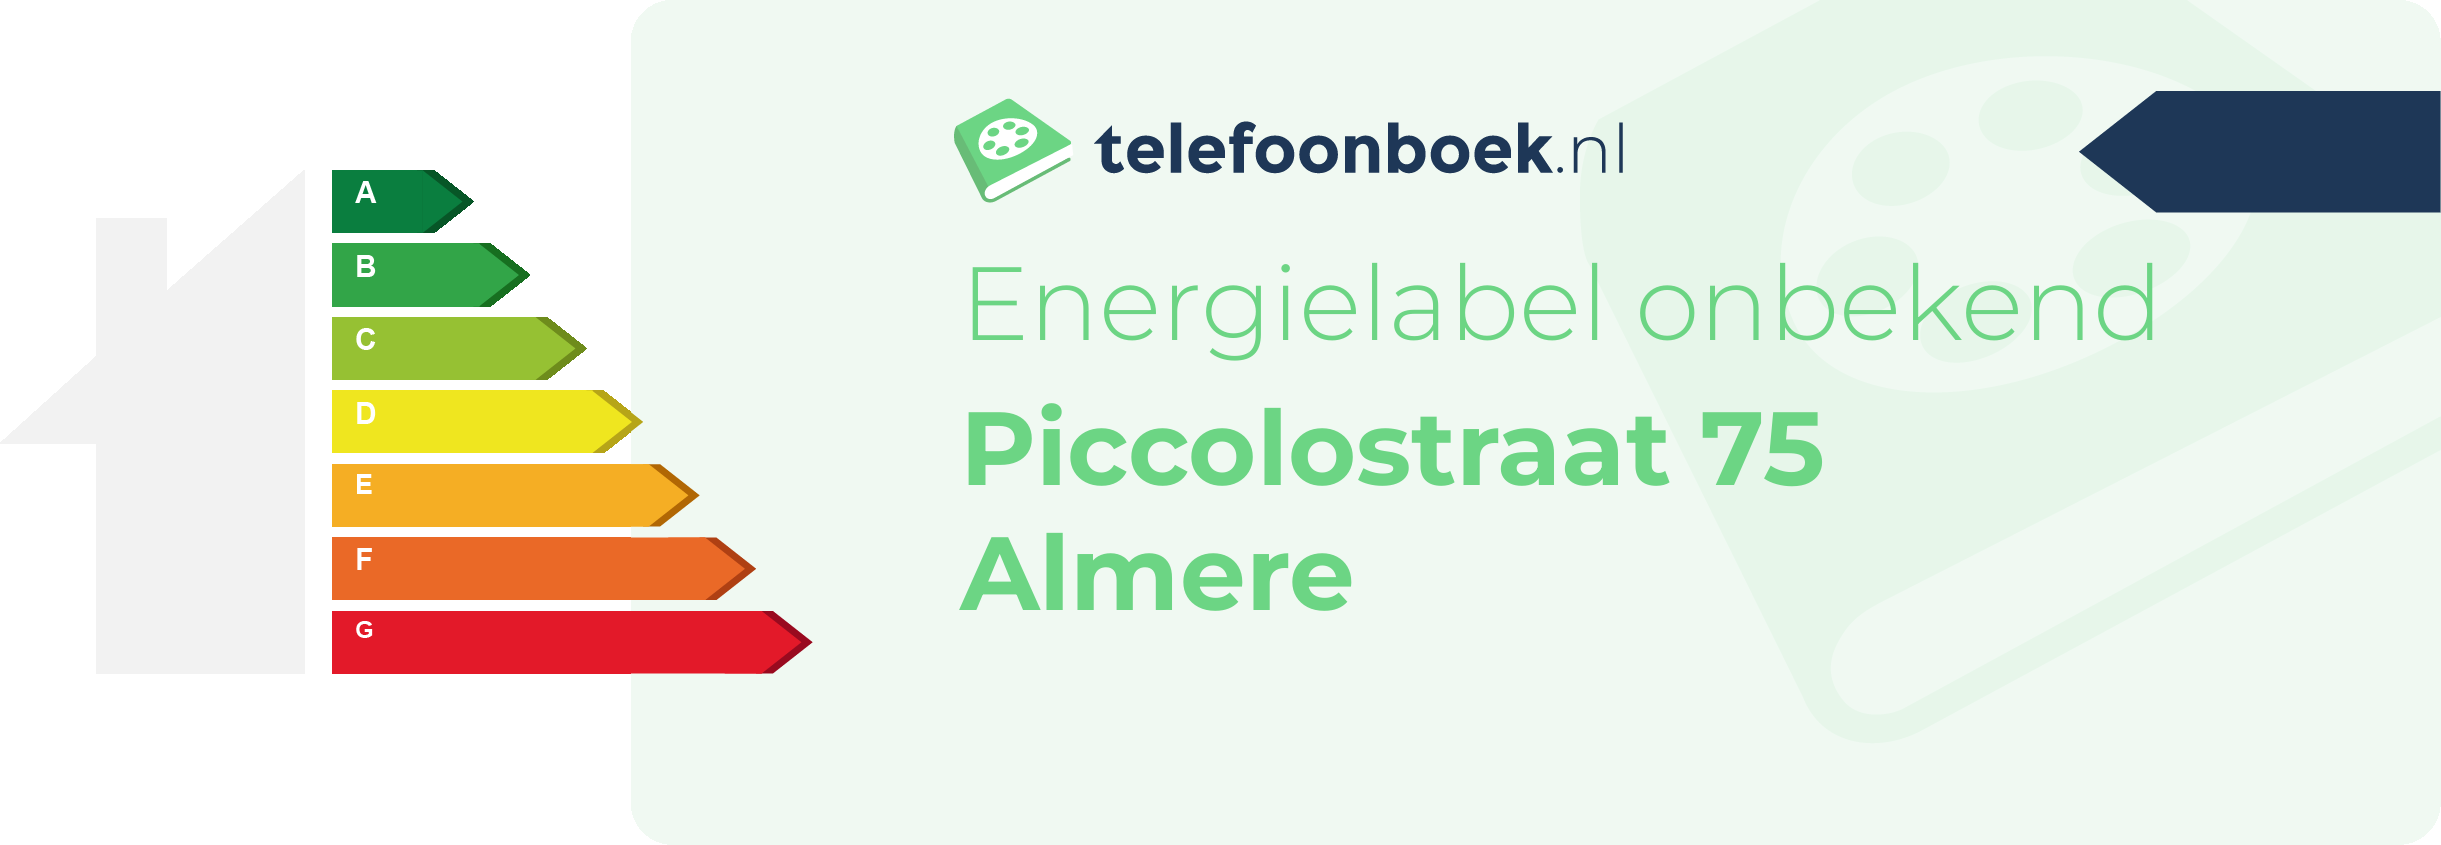 Energielabel Piccolostraat 75 Almere